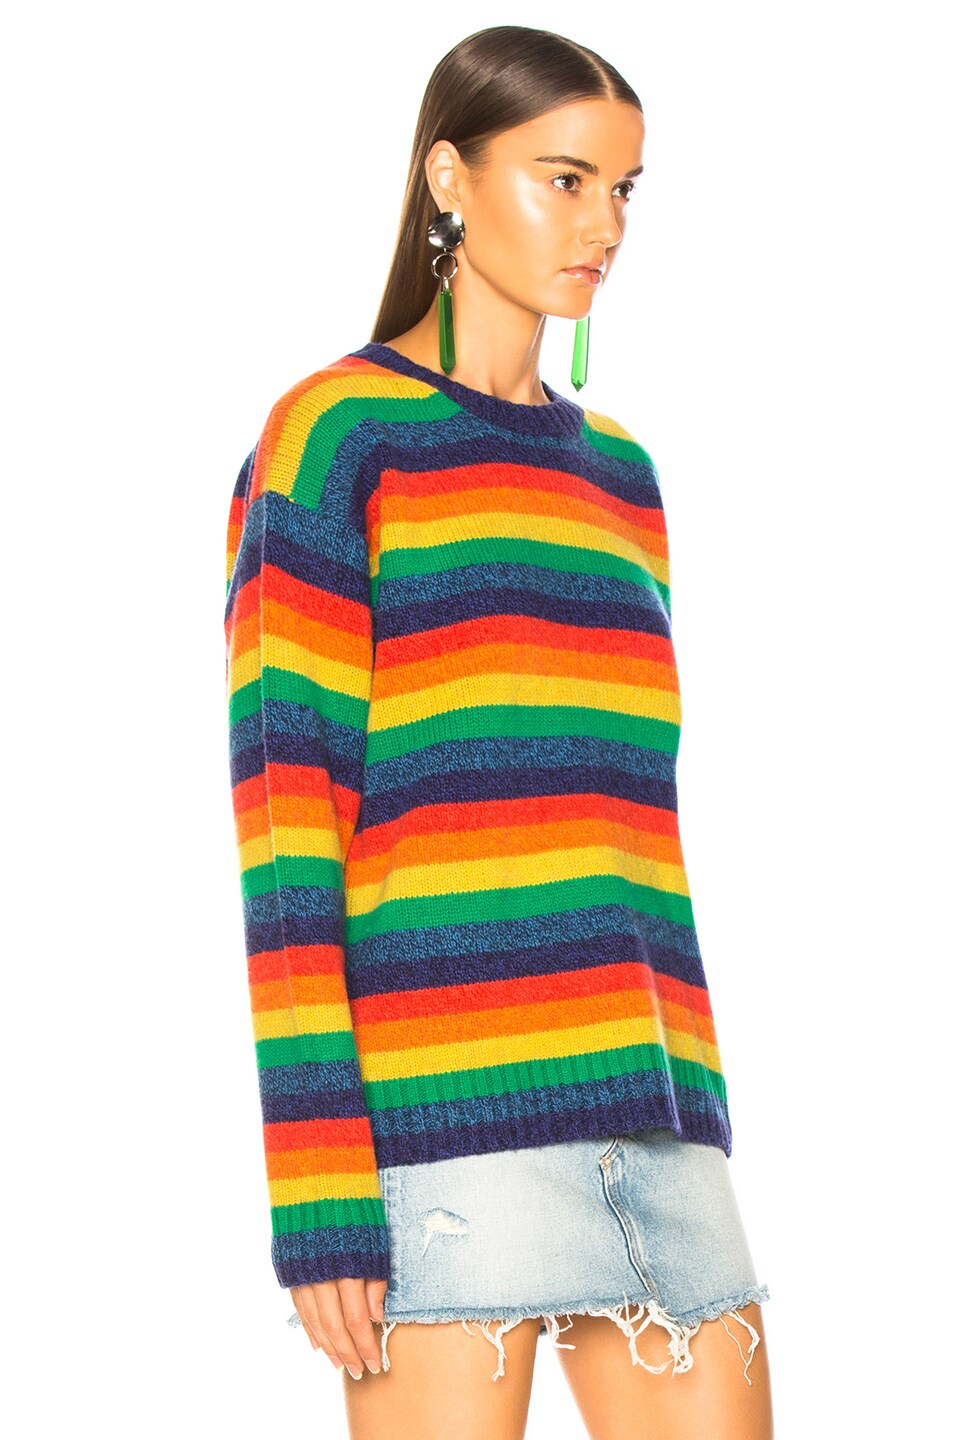 Acne Studios Samara Rainbow Sweater in Multi | FWRD